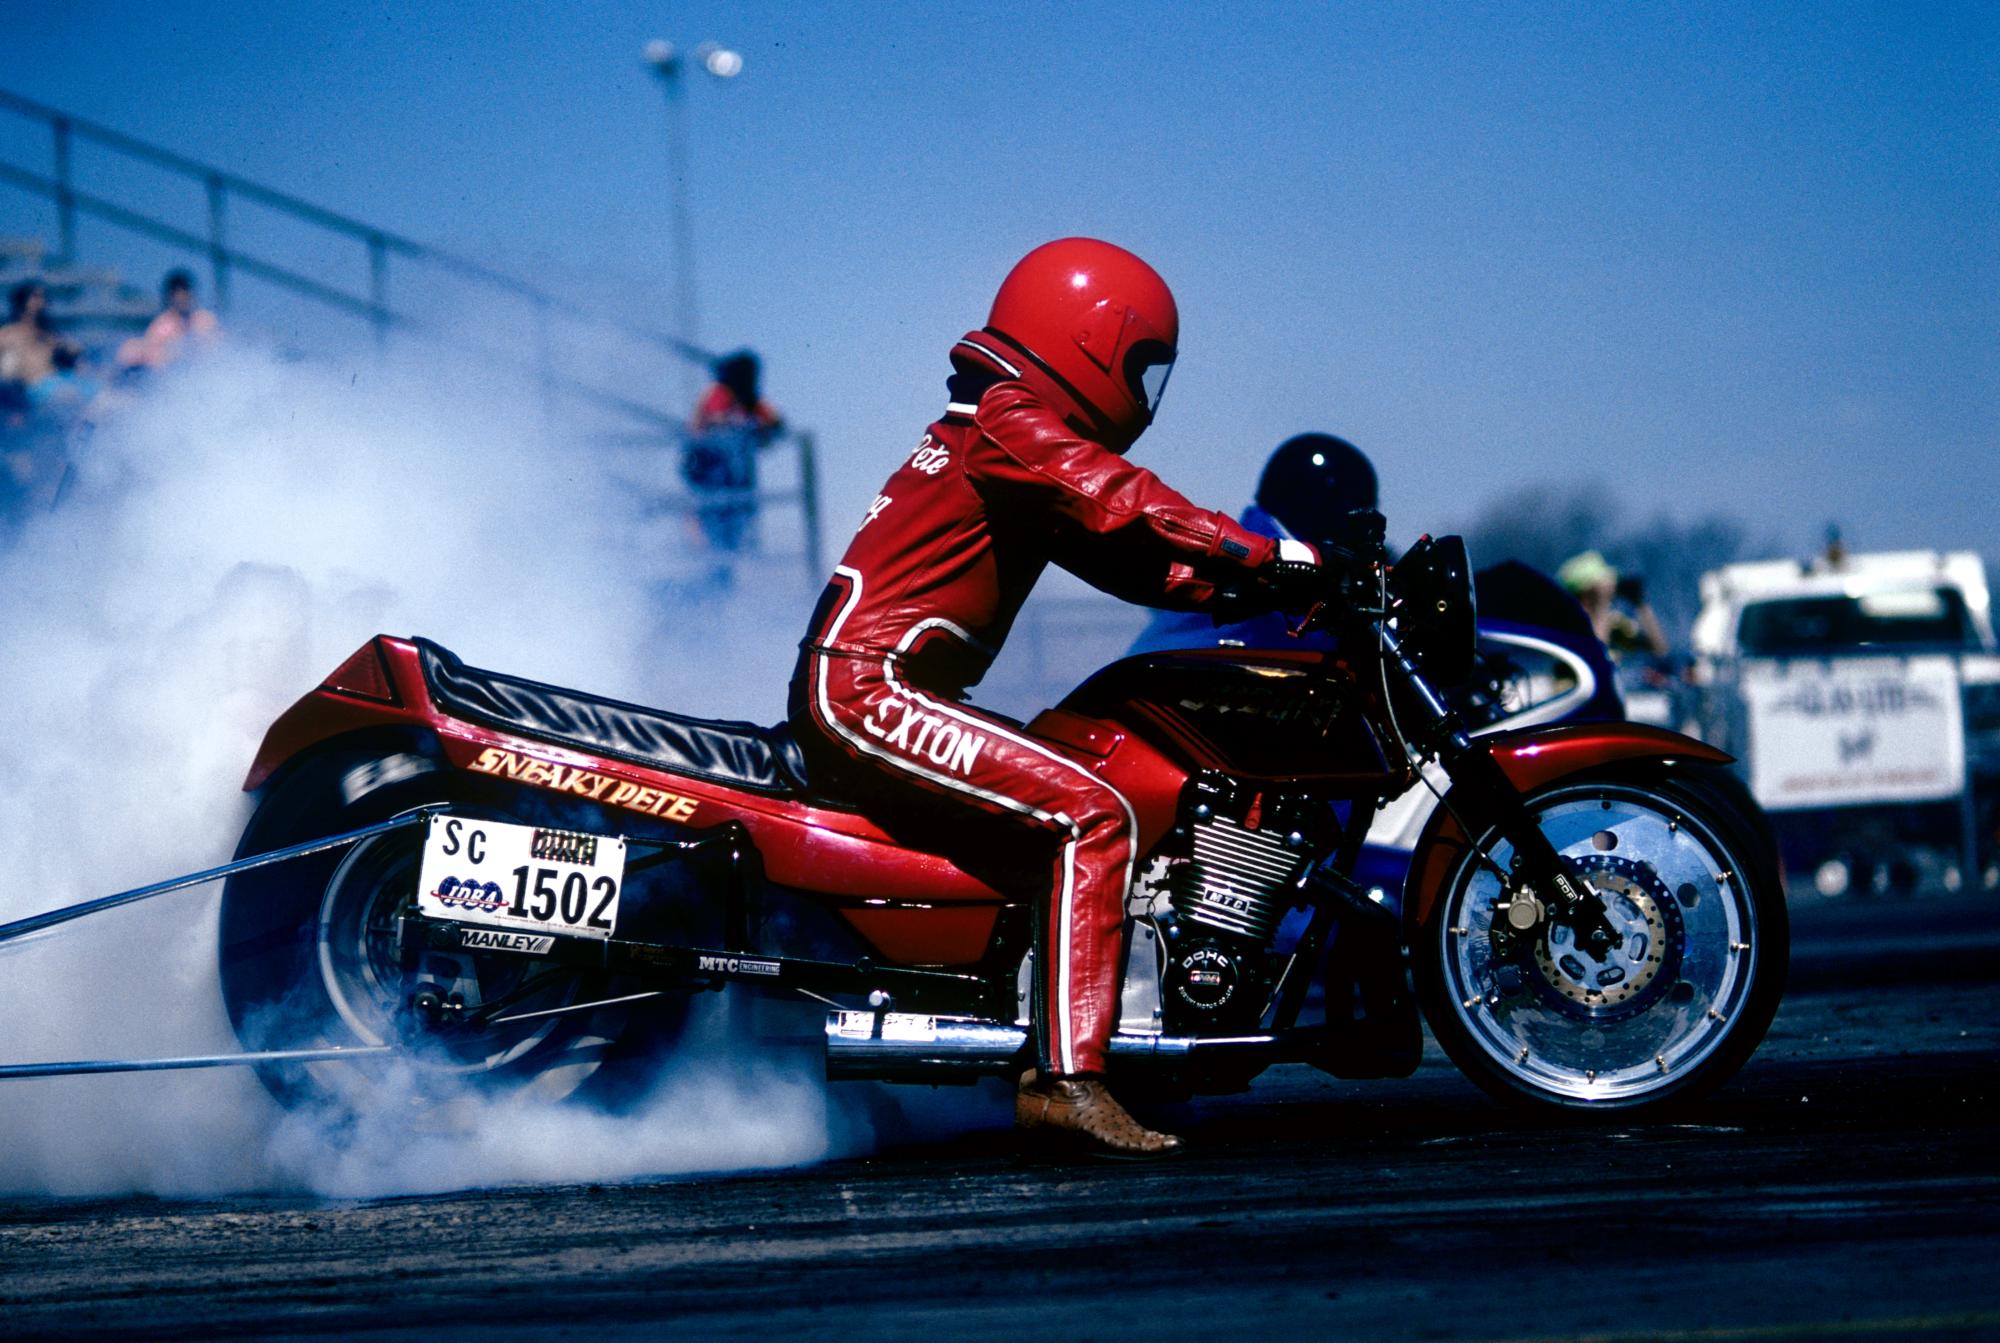 Texas Motor Drag Racing (1991) - Warming Up #3